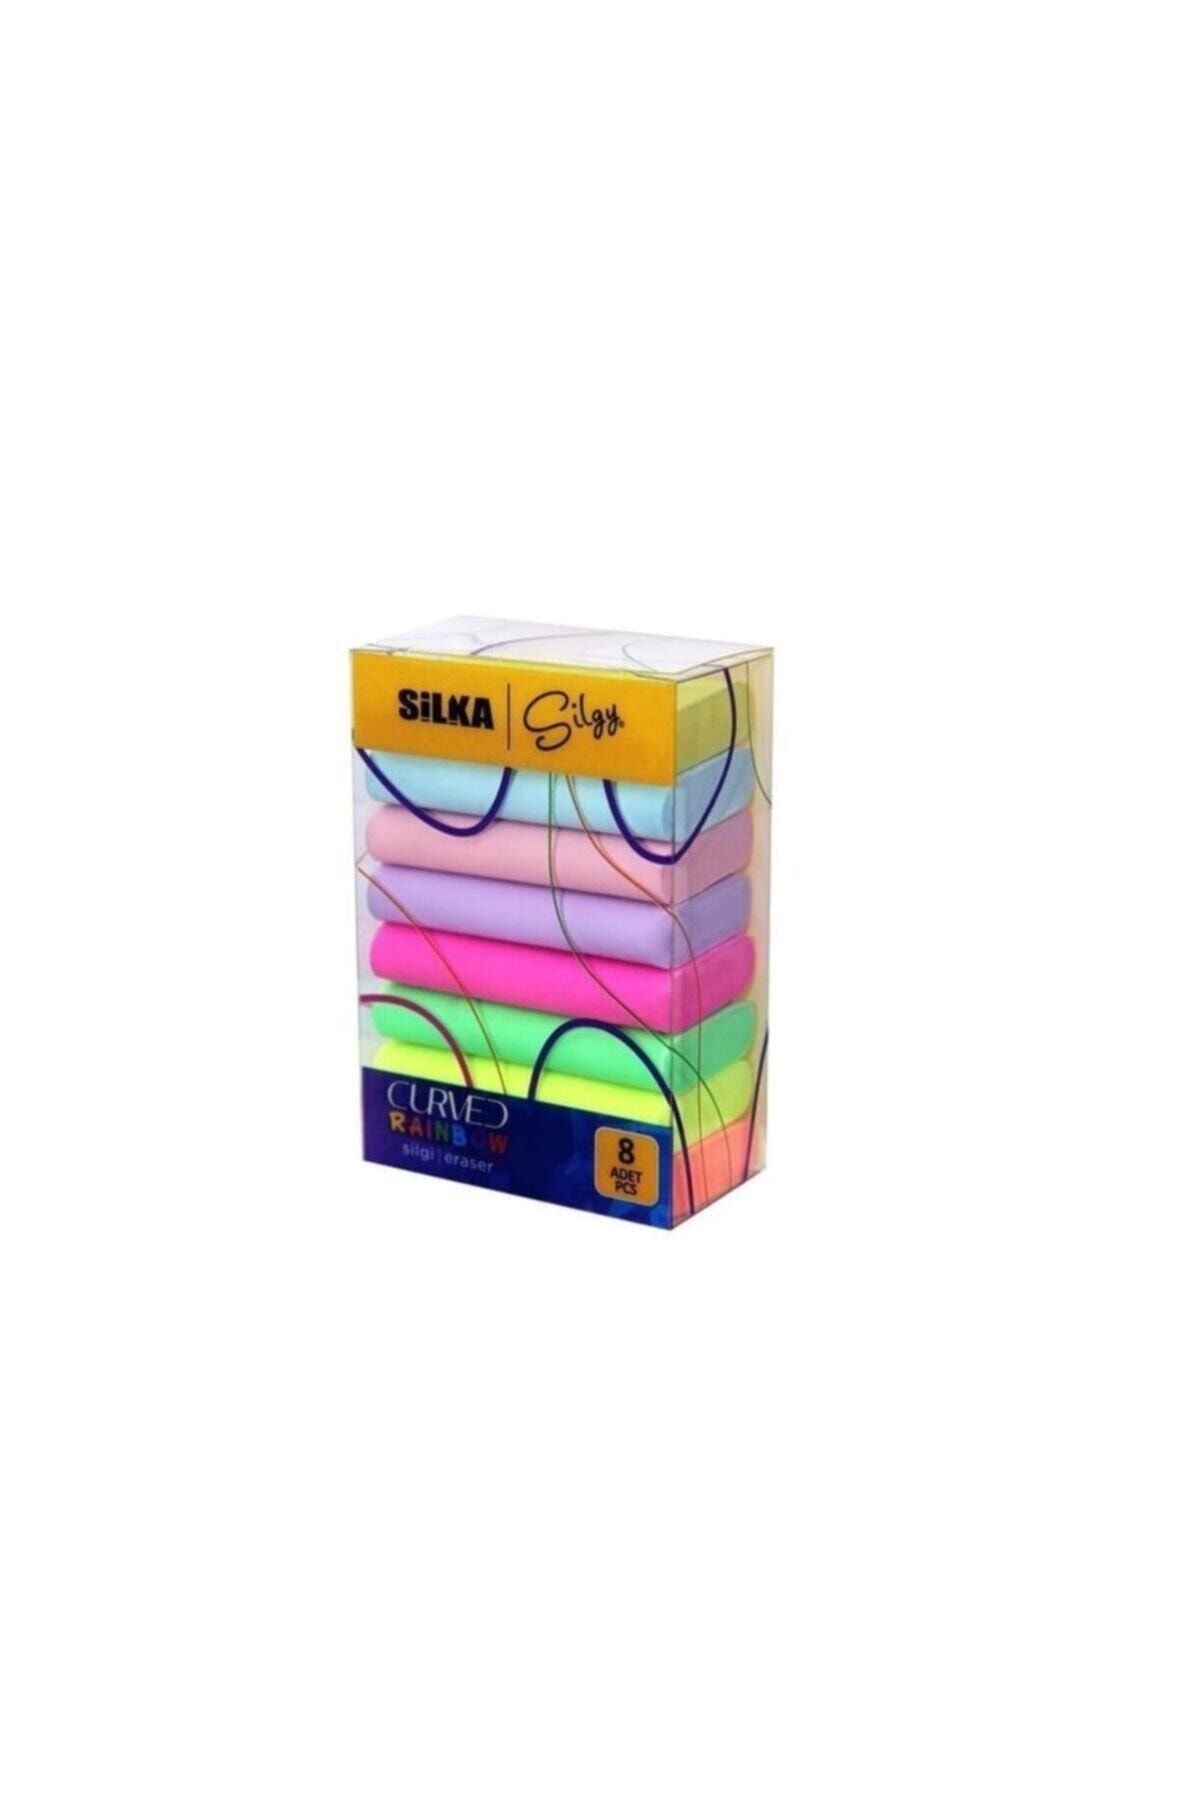 Silka Curved Rainbow Pastel Silgi 8'li Sg.51